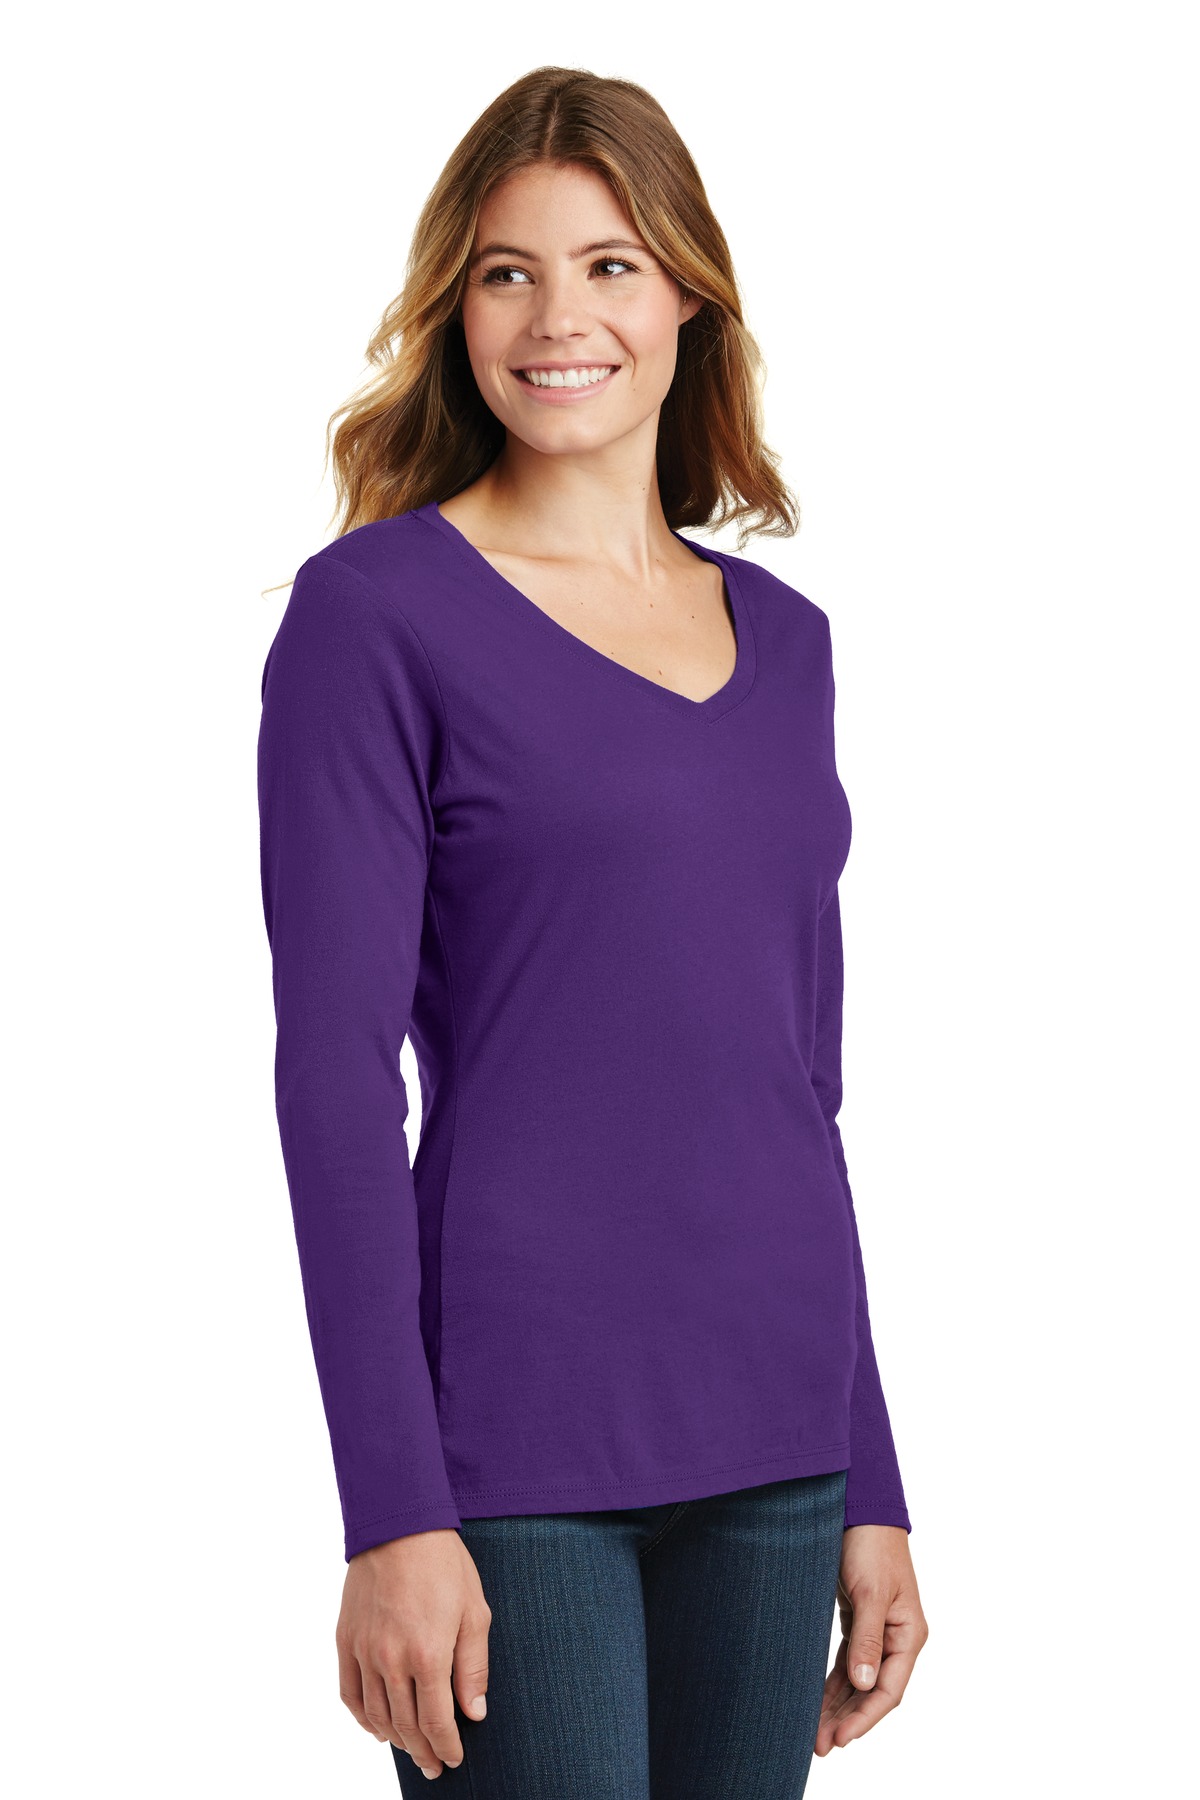 Port & Company Ladies Long Sleeve Fan Favorite V Neck Tee-4XL (Team Purple) - image 4 of 6